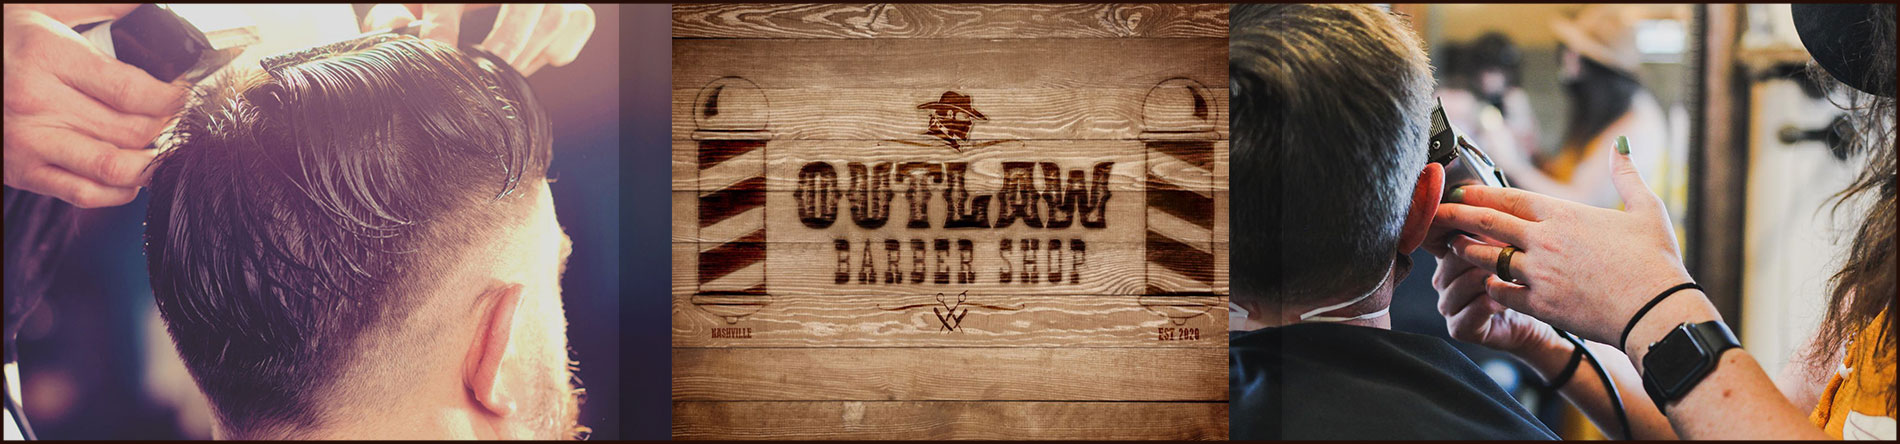 Outlaw Barber shop